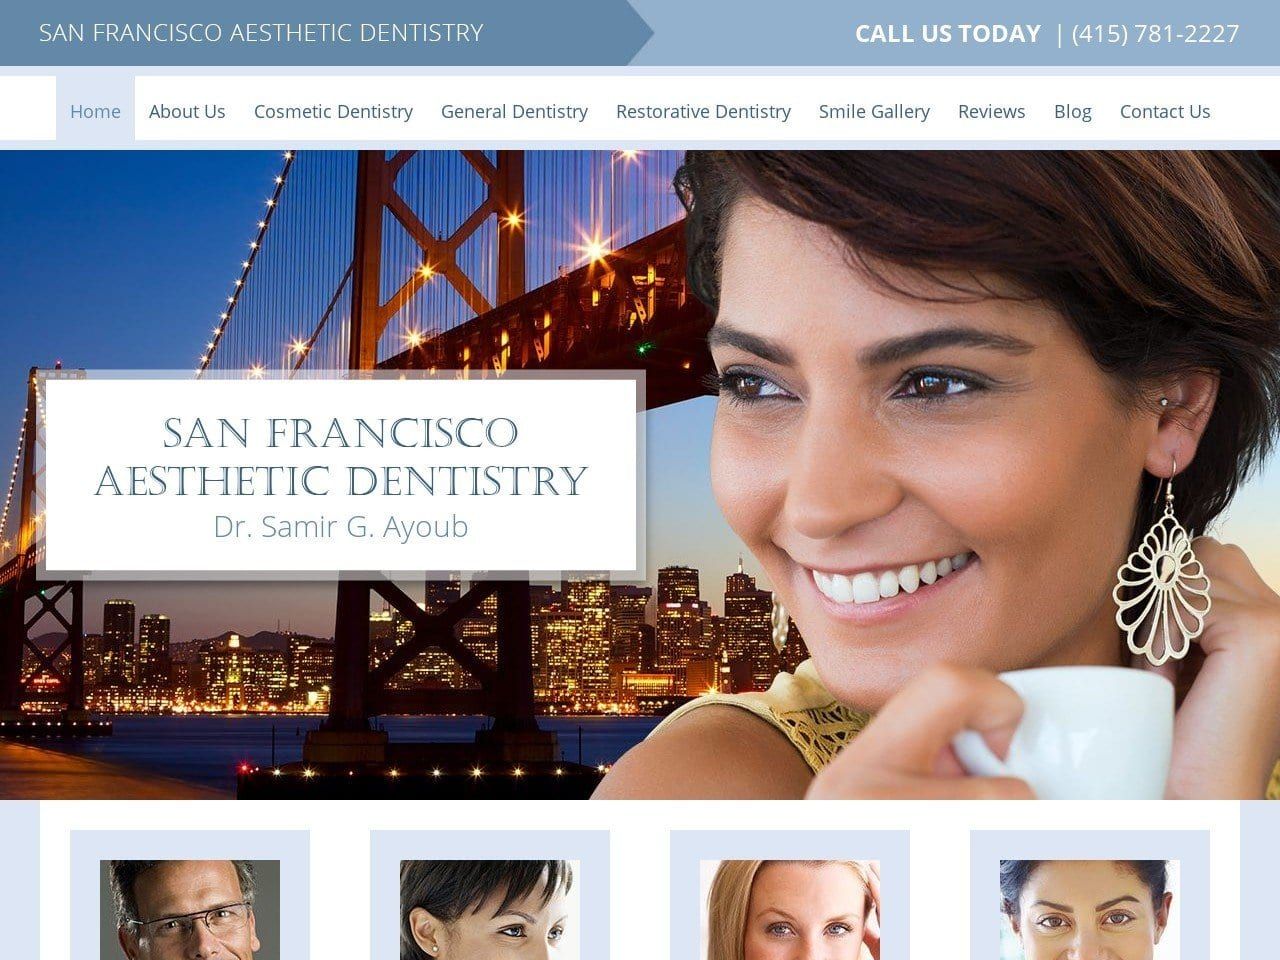 San Francisco Aesthetic Dentist Website Screenshot from sanfranciscoaestheticdentistry.com